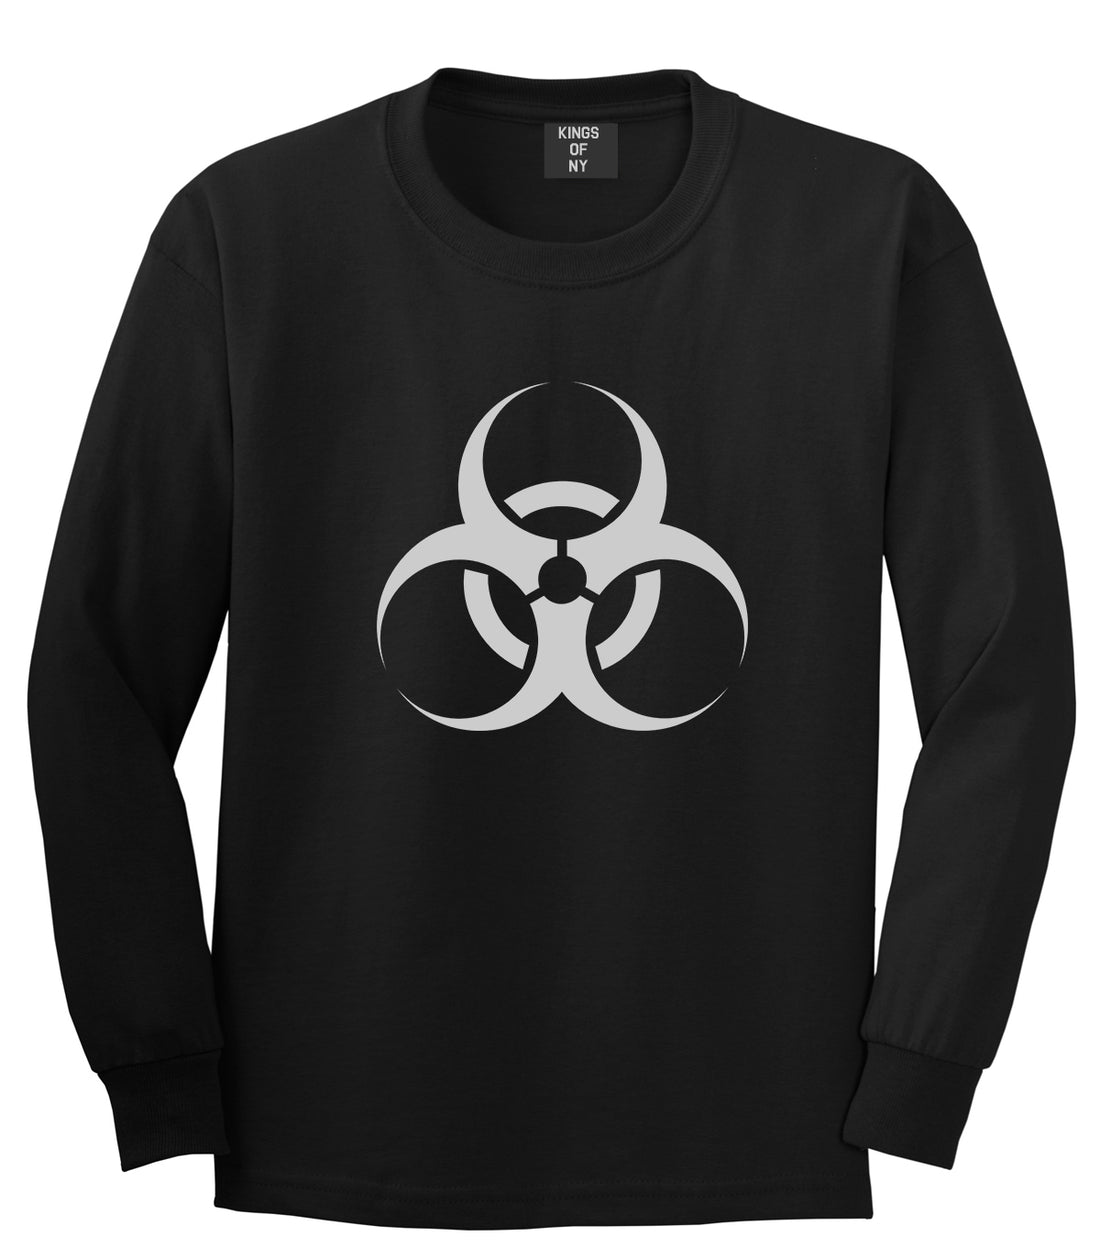 Biohazard Symbol Black Long Sleeve T-Shirt by Kings Of NY